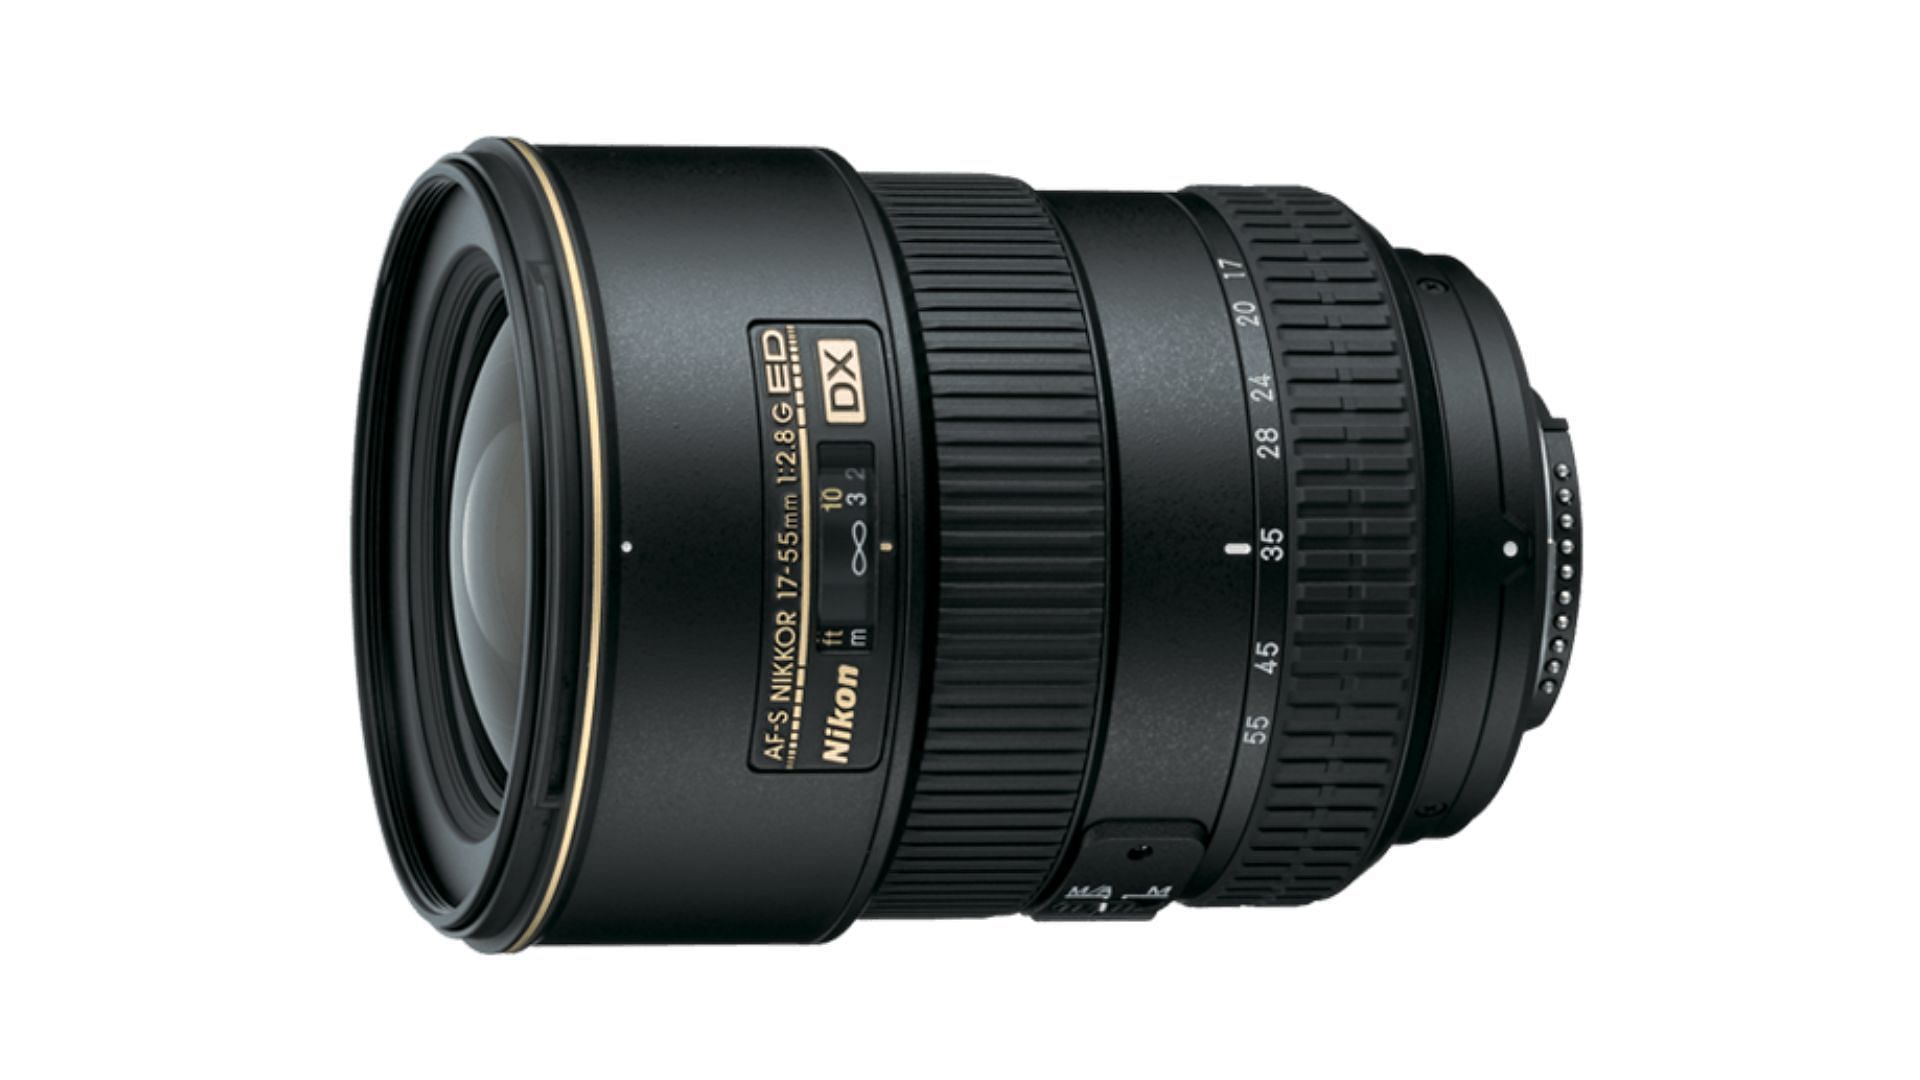 AF-S DX Zoom-Nikkor 17-55mm f/2.8G IF-ED is among the best lens for Nikon cameras (Image via Nikon USA)